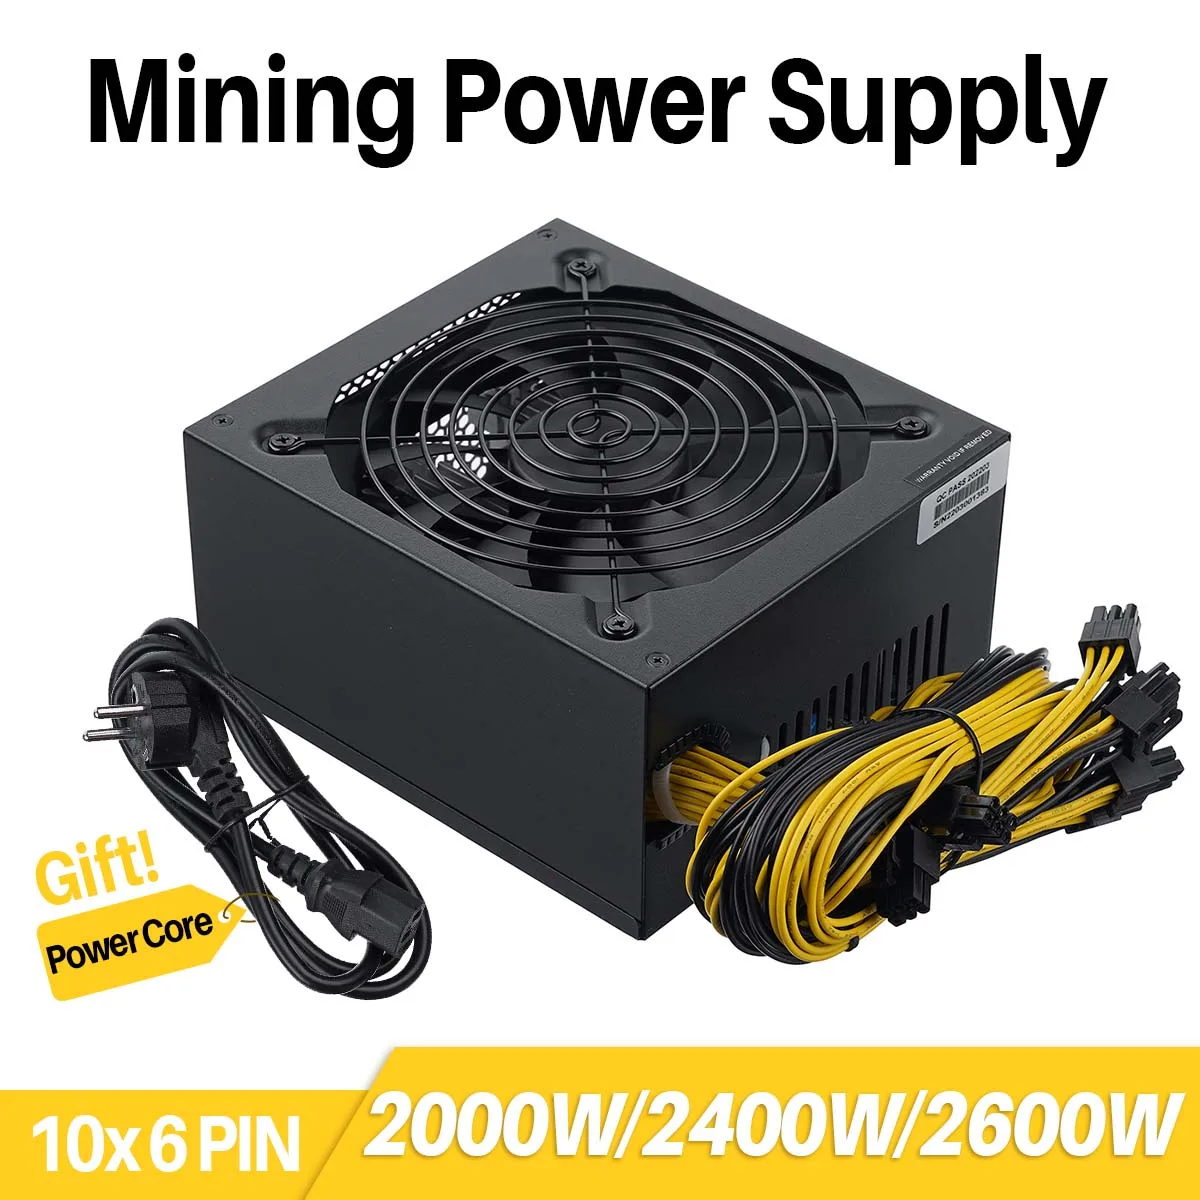 

2000W 2400W 2600W ATX ETH Mining Power Supply Bitcoin 160V-240V 95% Efficiency Supports 8 Card Platform 10 6PIN Ports 4U Single